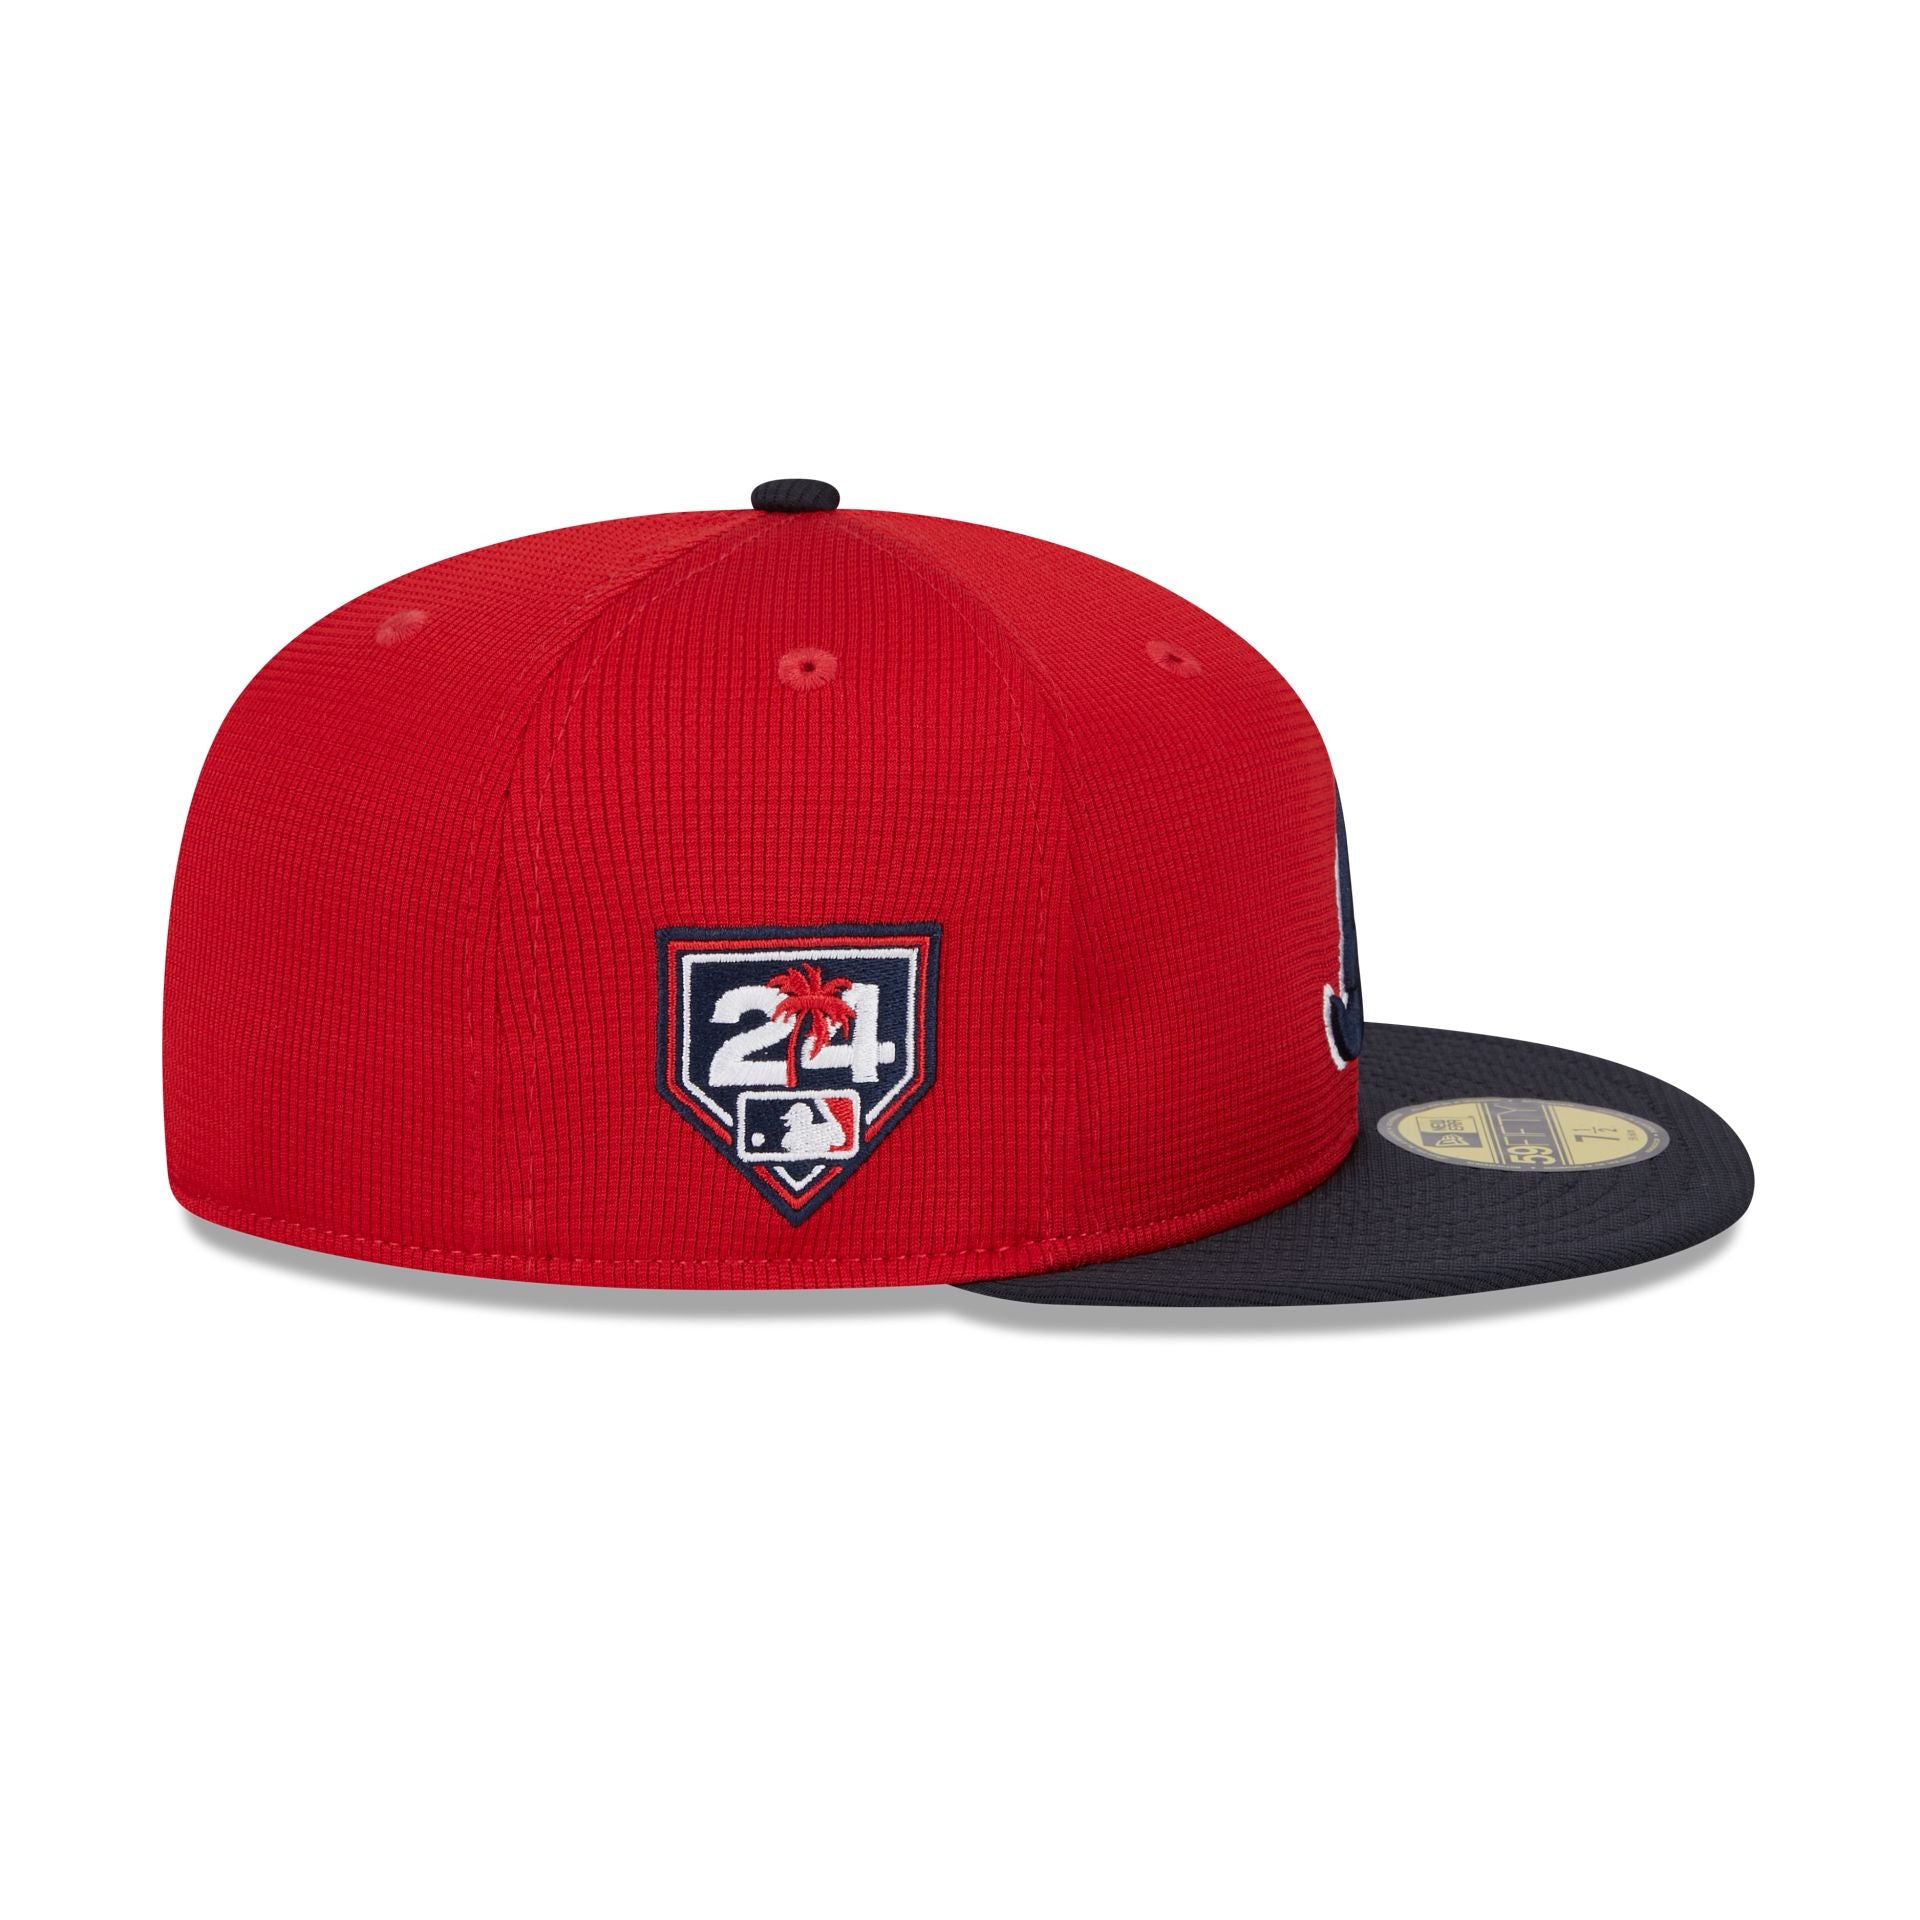 New Era releases new Spring Training hat for the Atlanta Braves - Battery  Power